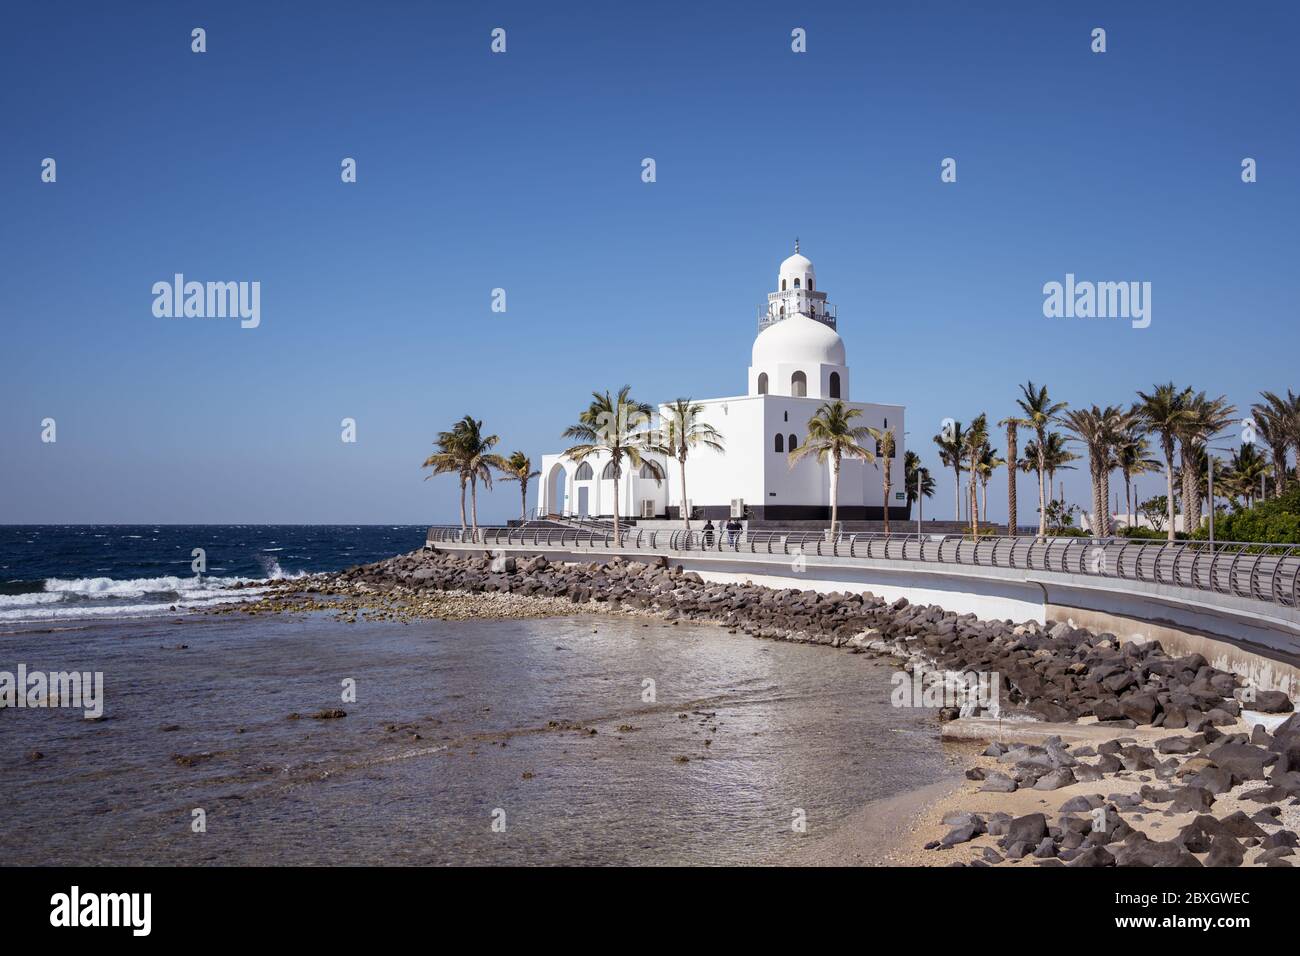 Jeddah / Arabia Saudita - 20 gennaio 2020: Bella moschea con palme vicino al mare Foto Stock